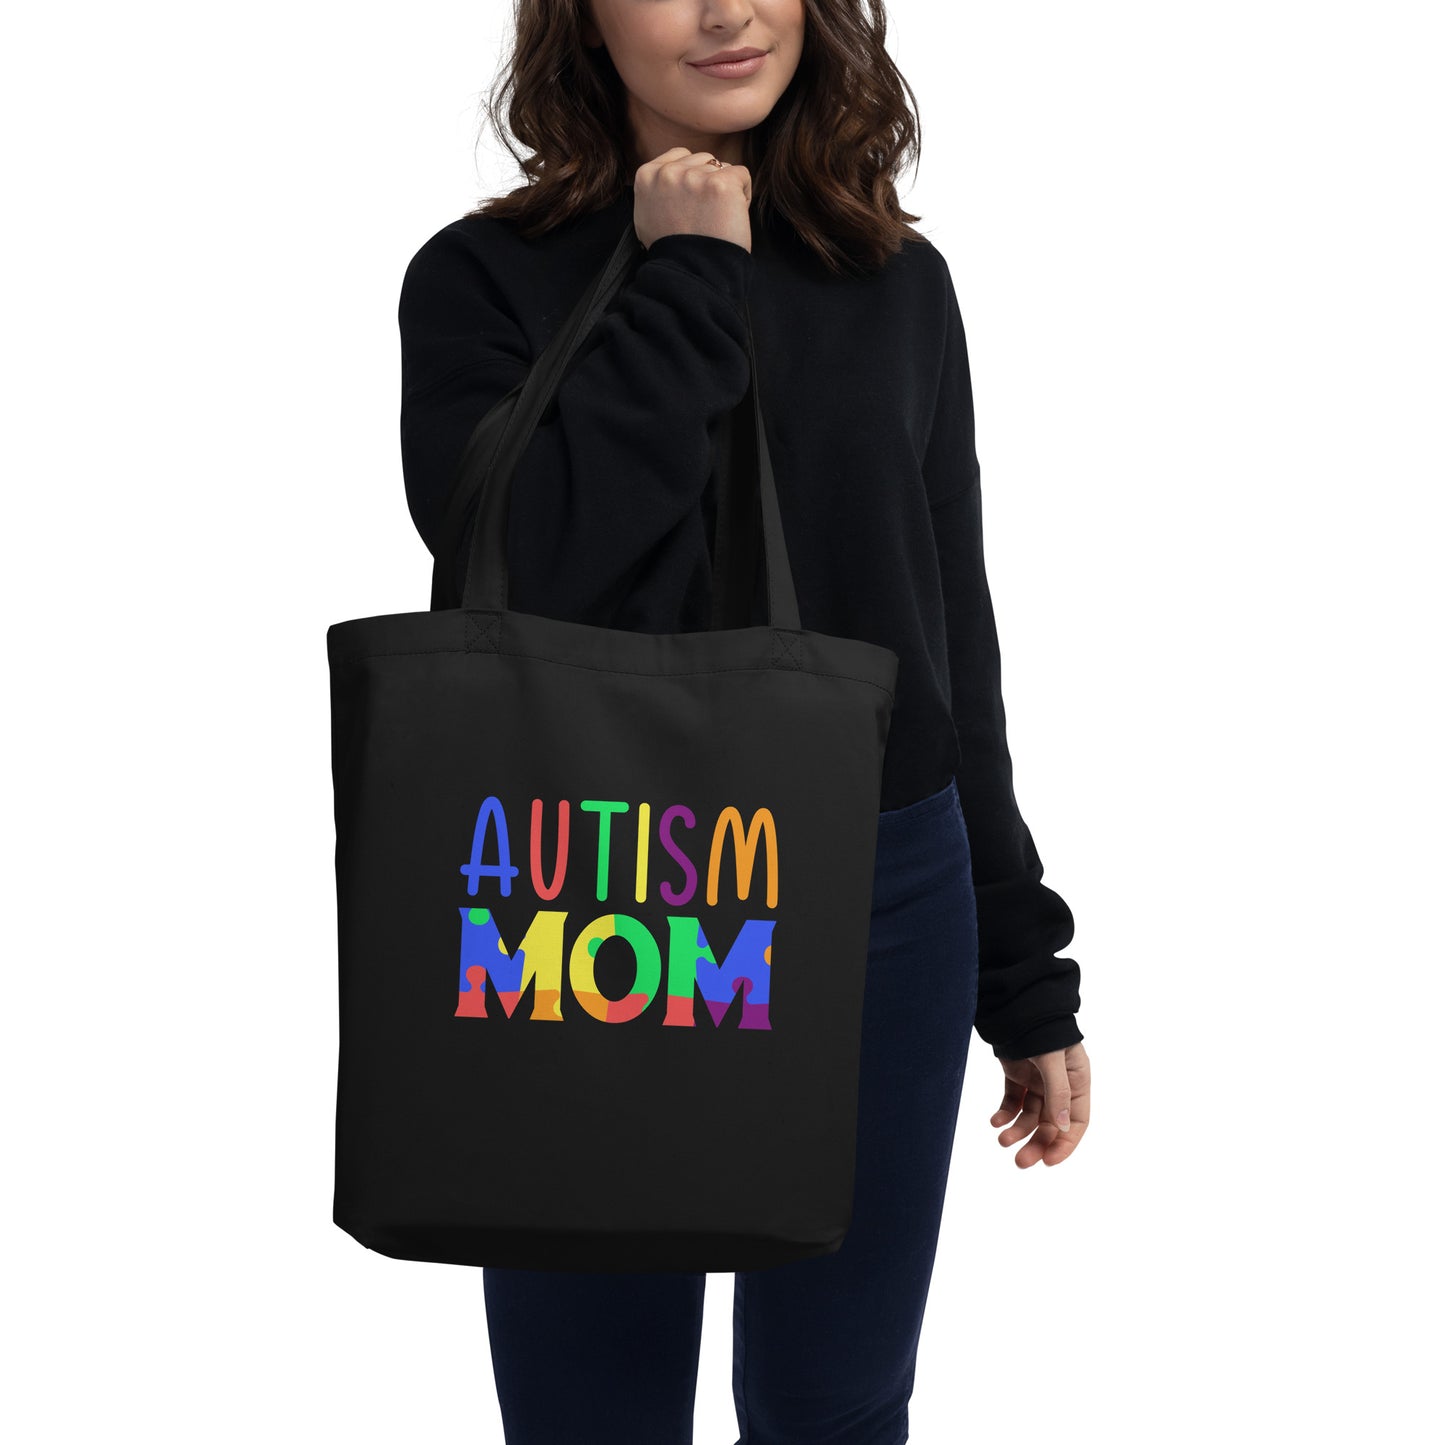 Autism Mom Tote Bag Black